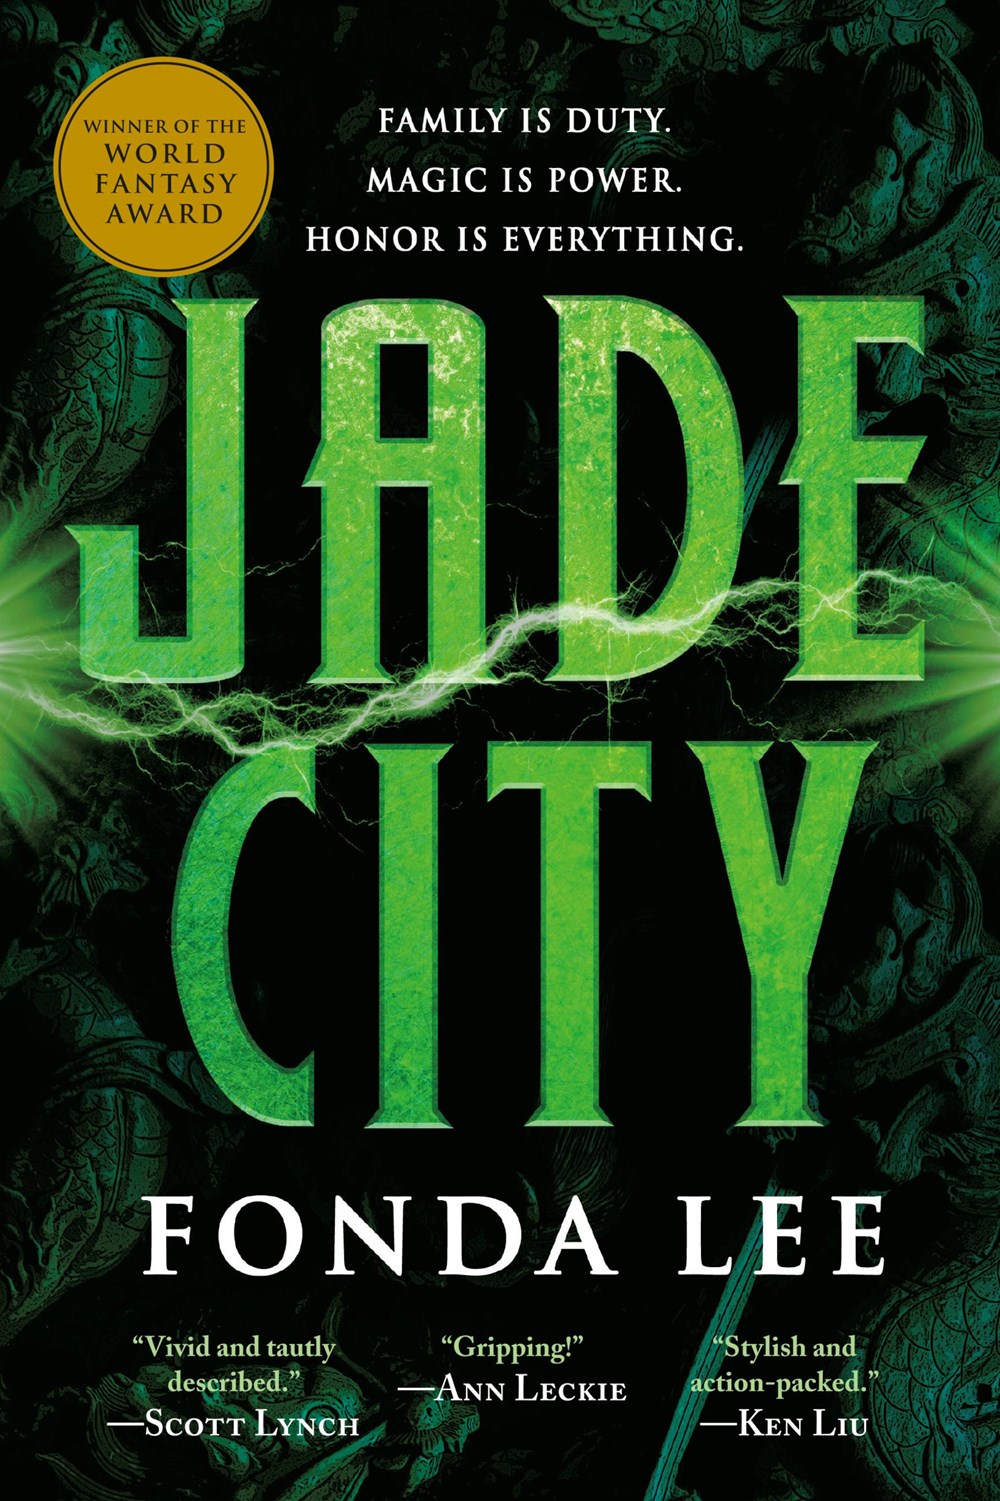 Jade City: The Green Bone Saga Book 1